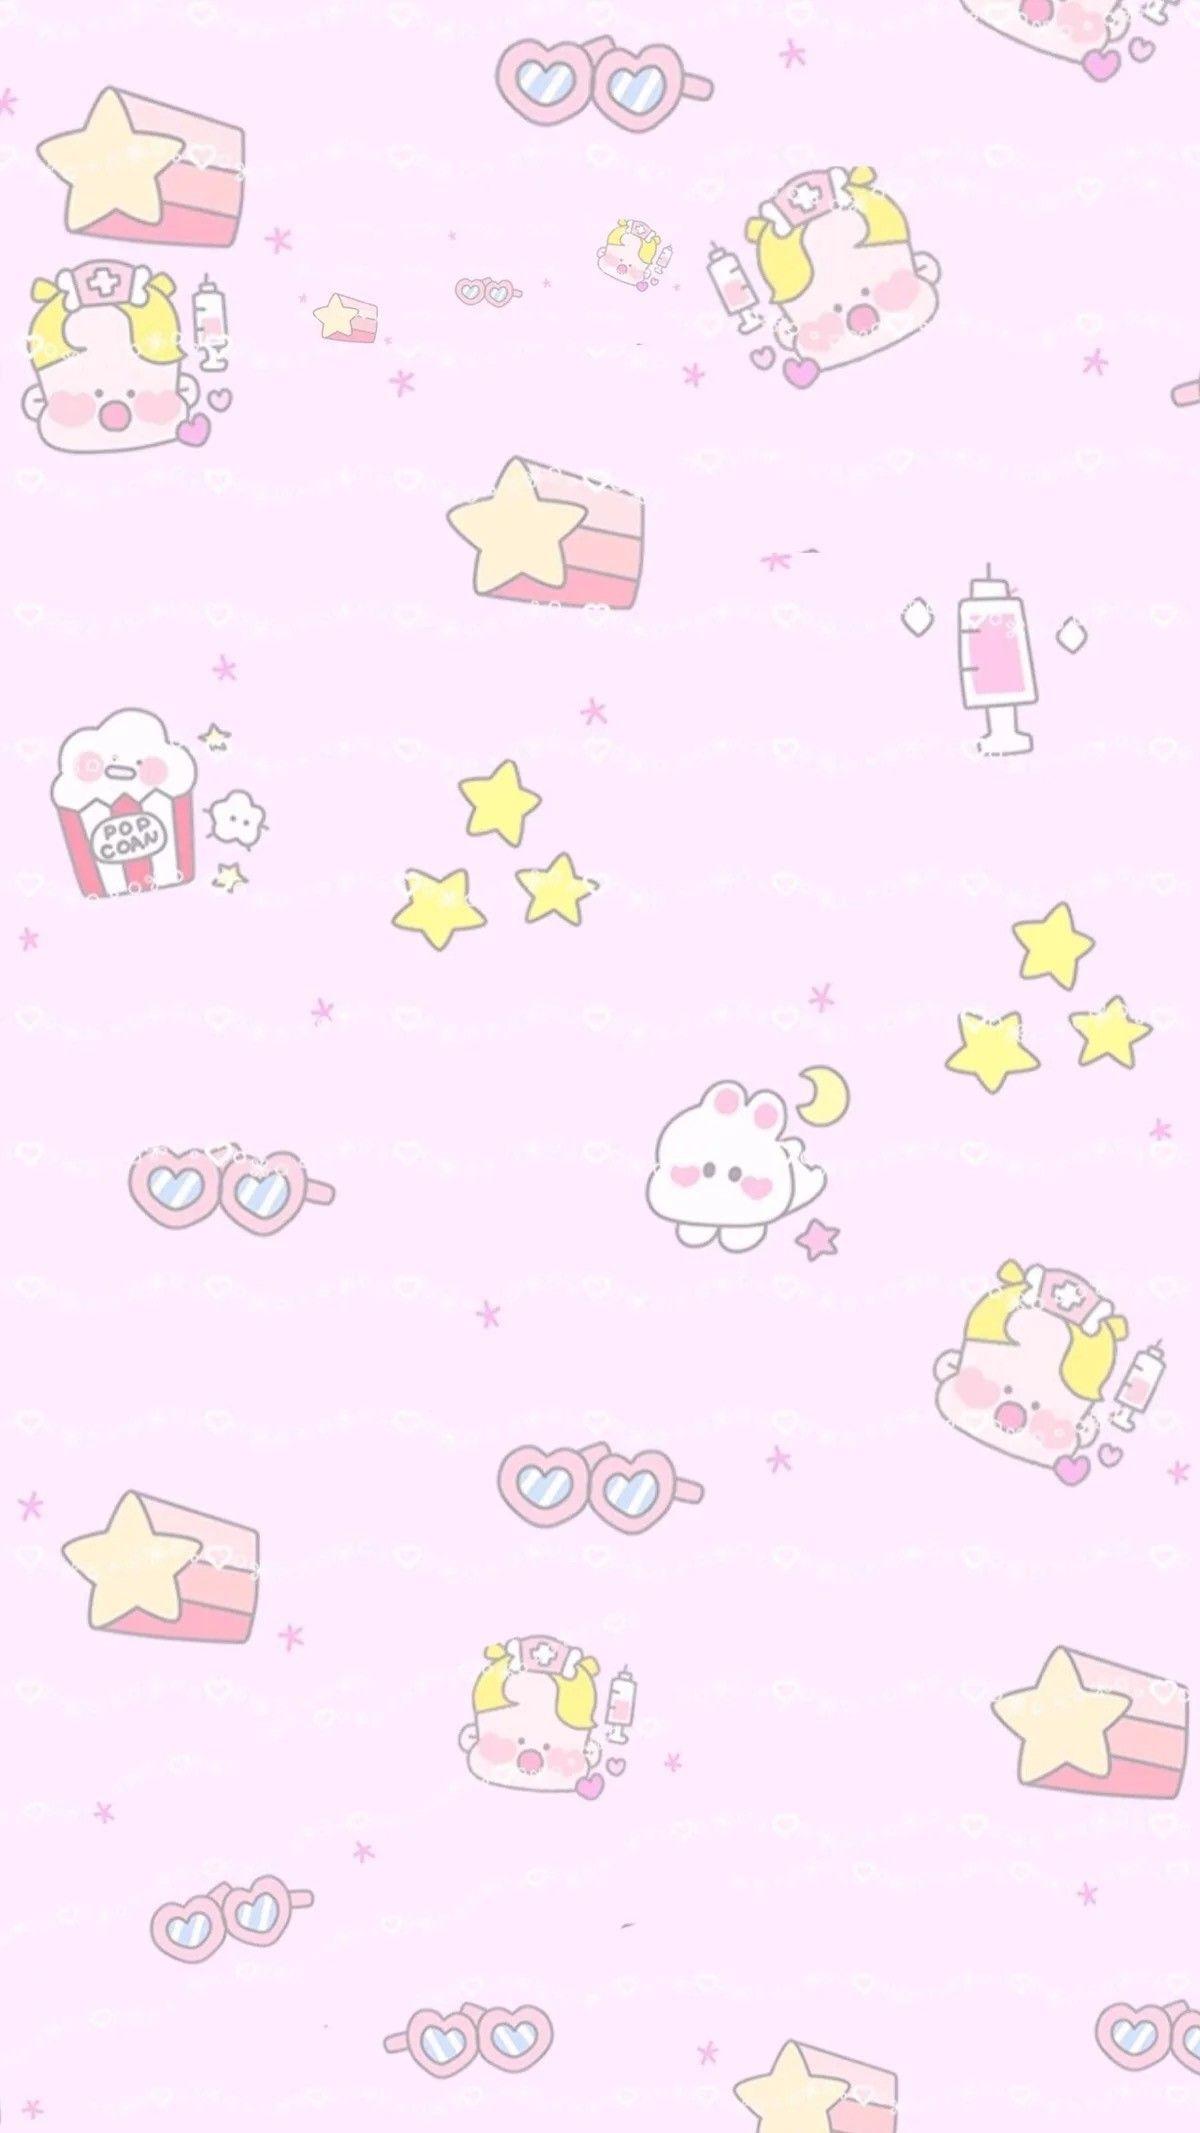 Cute Kawaii Wallpapers for iPhone